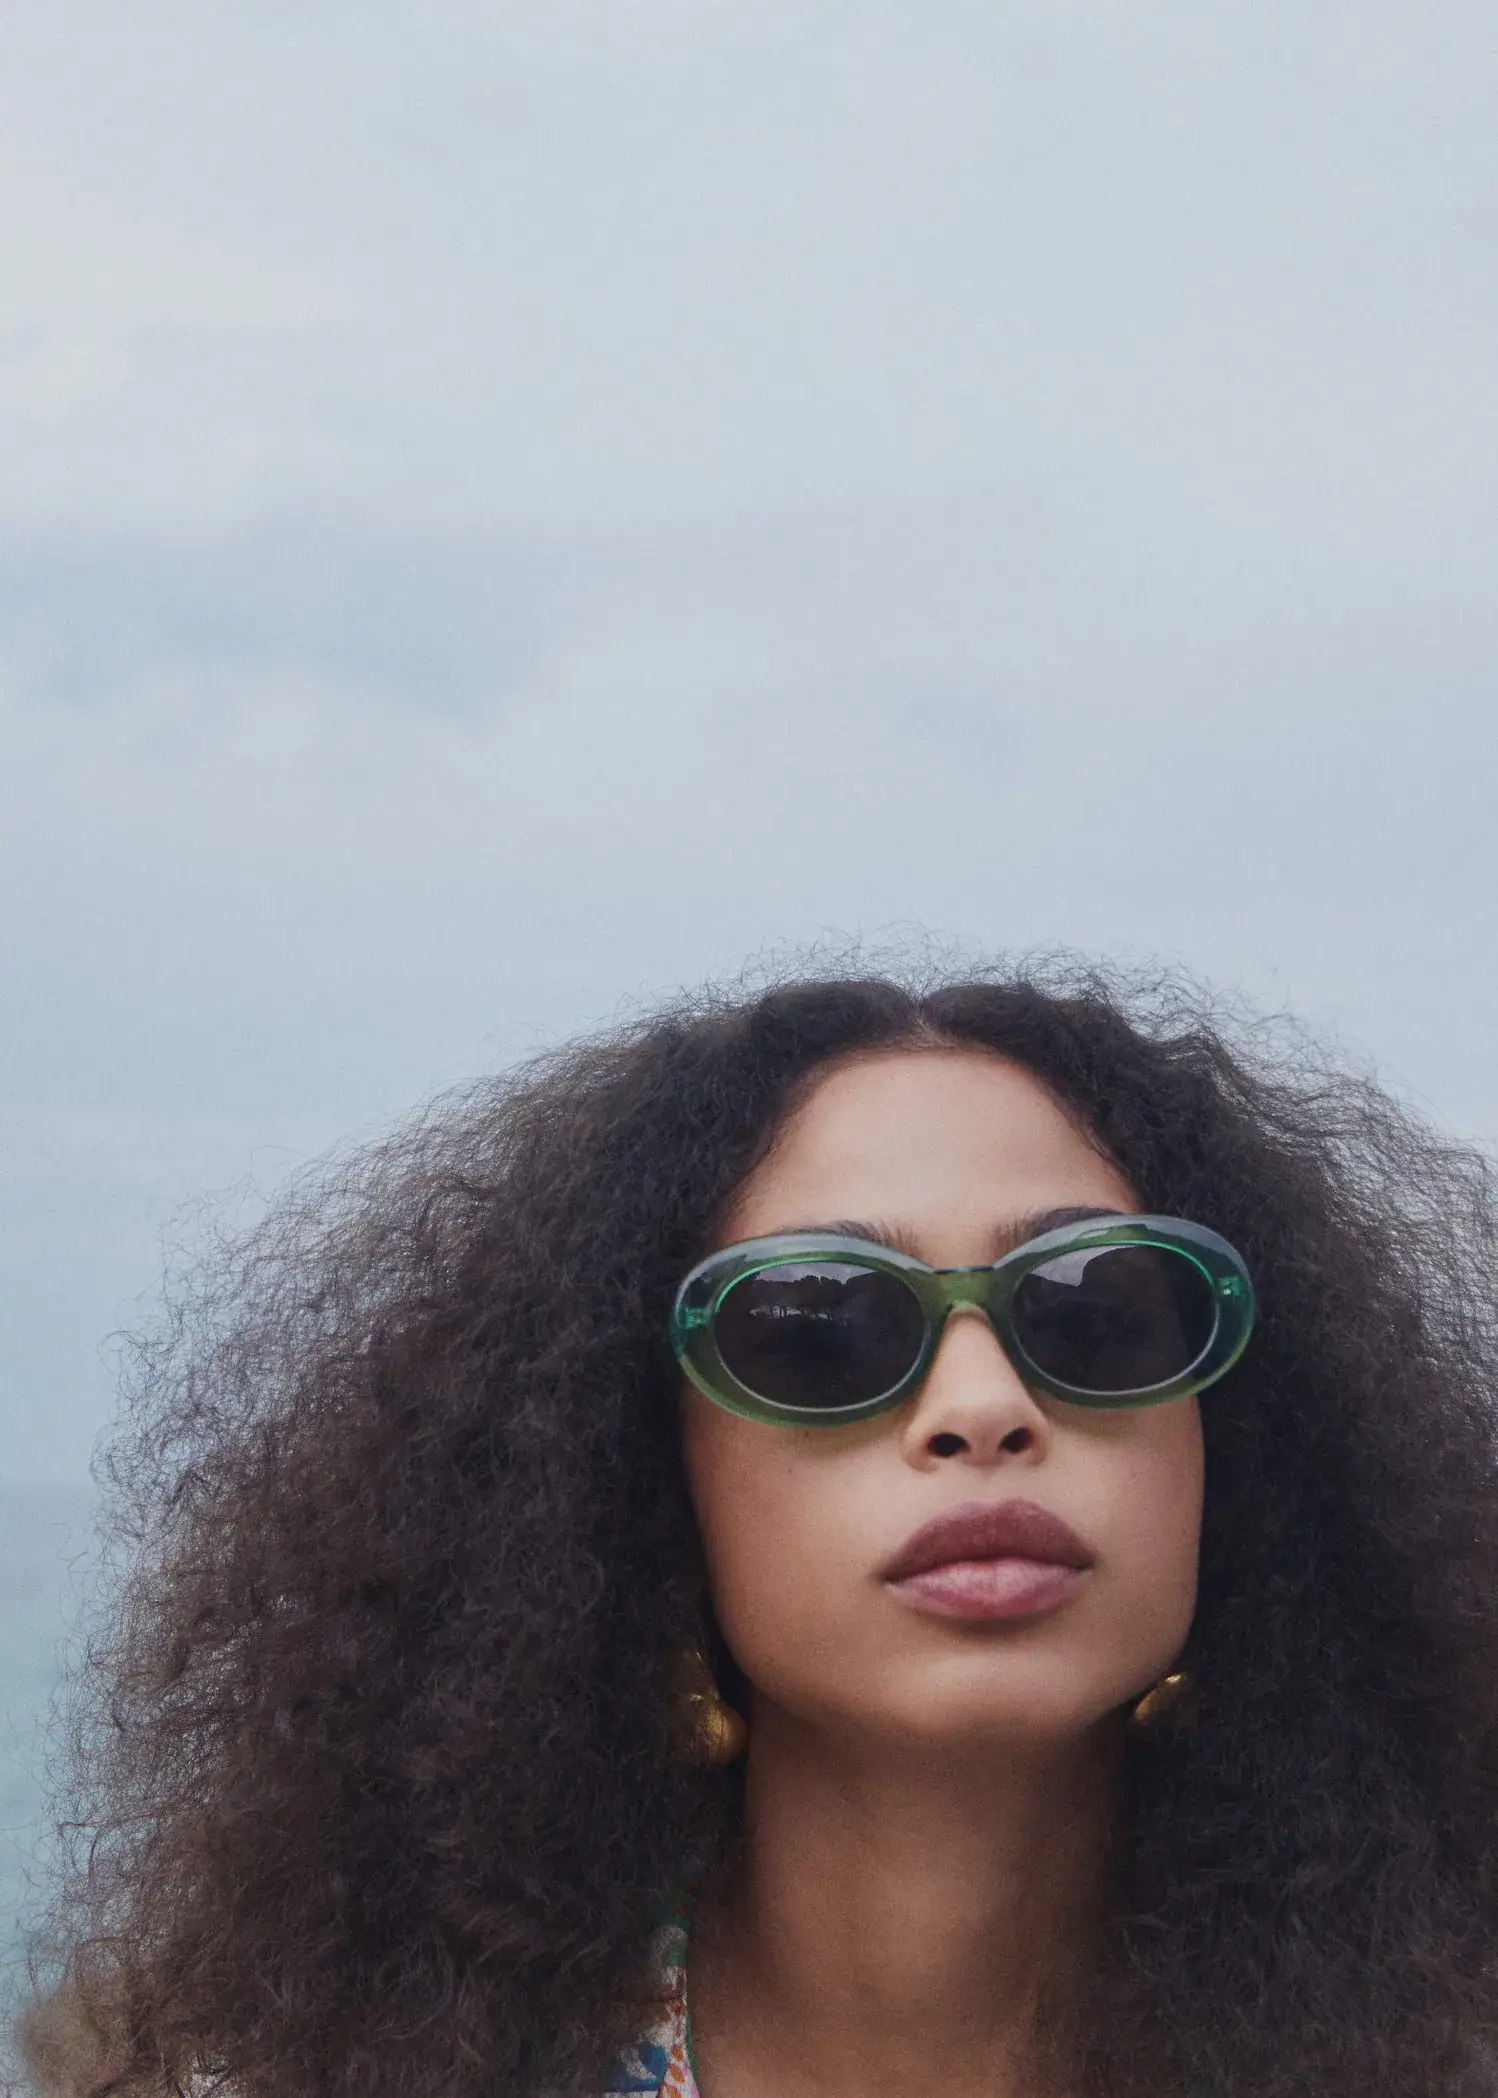 Mango Semi-transparent frame sunglasses. a close up of a person wearing sunglasses 